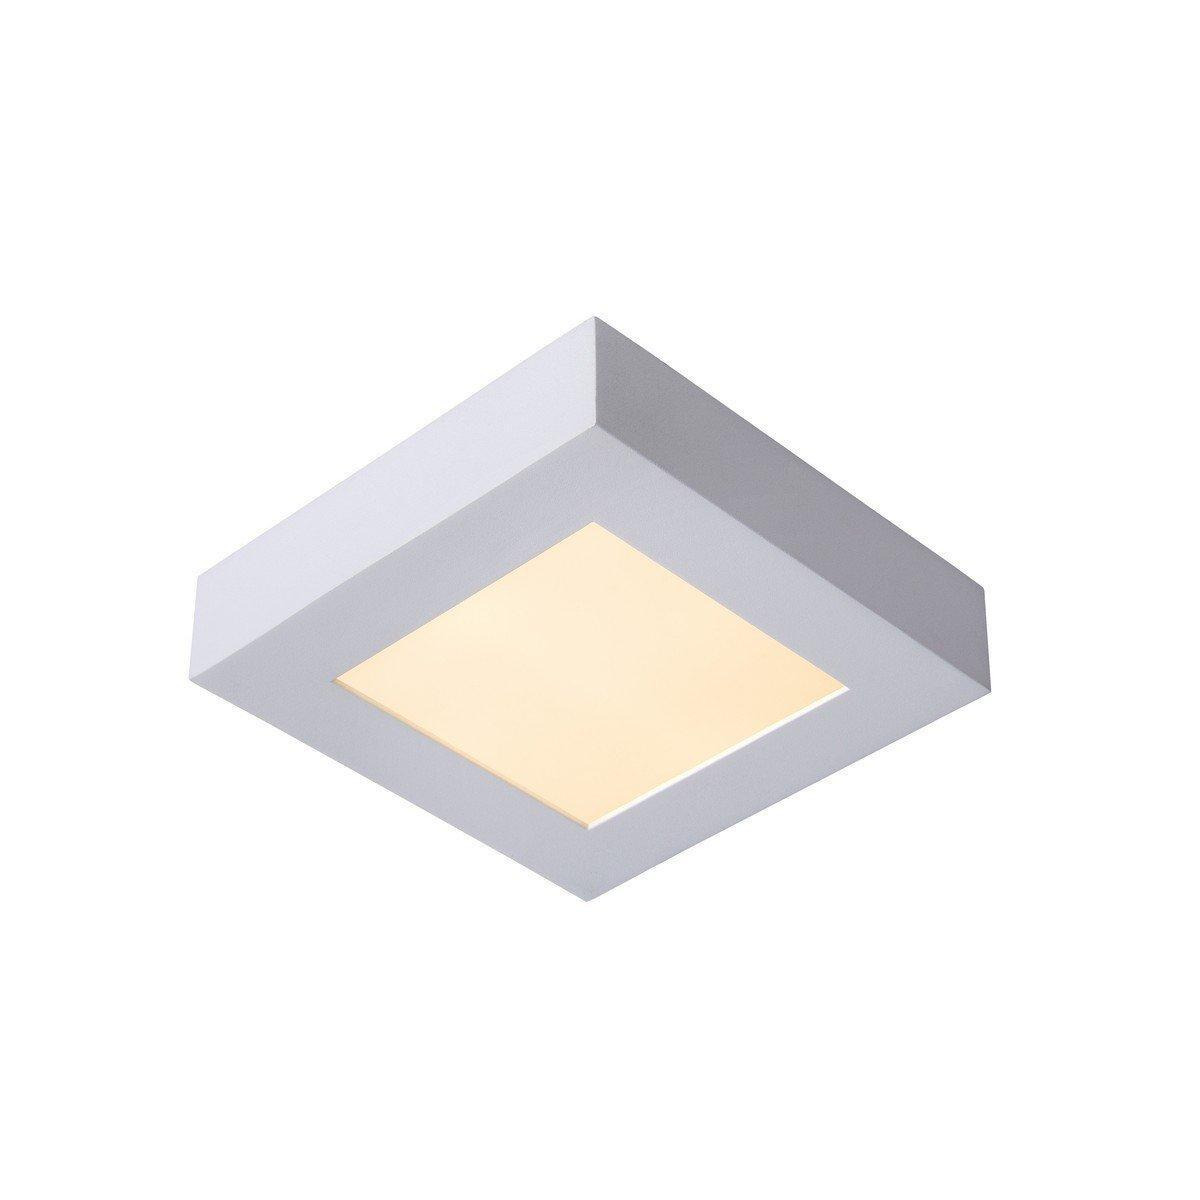 'BRICE' Dimmable Stylish Square Bathroom LED Flush Ceiling Light - image 1